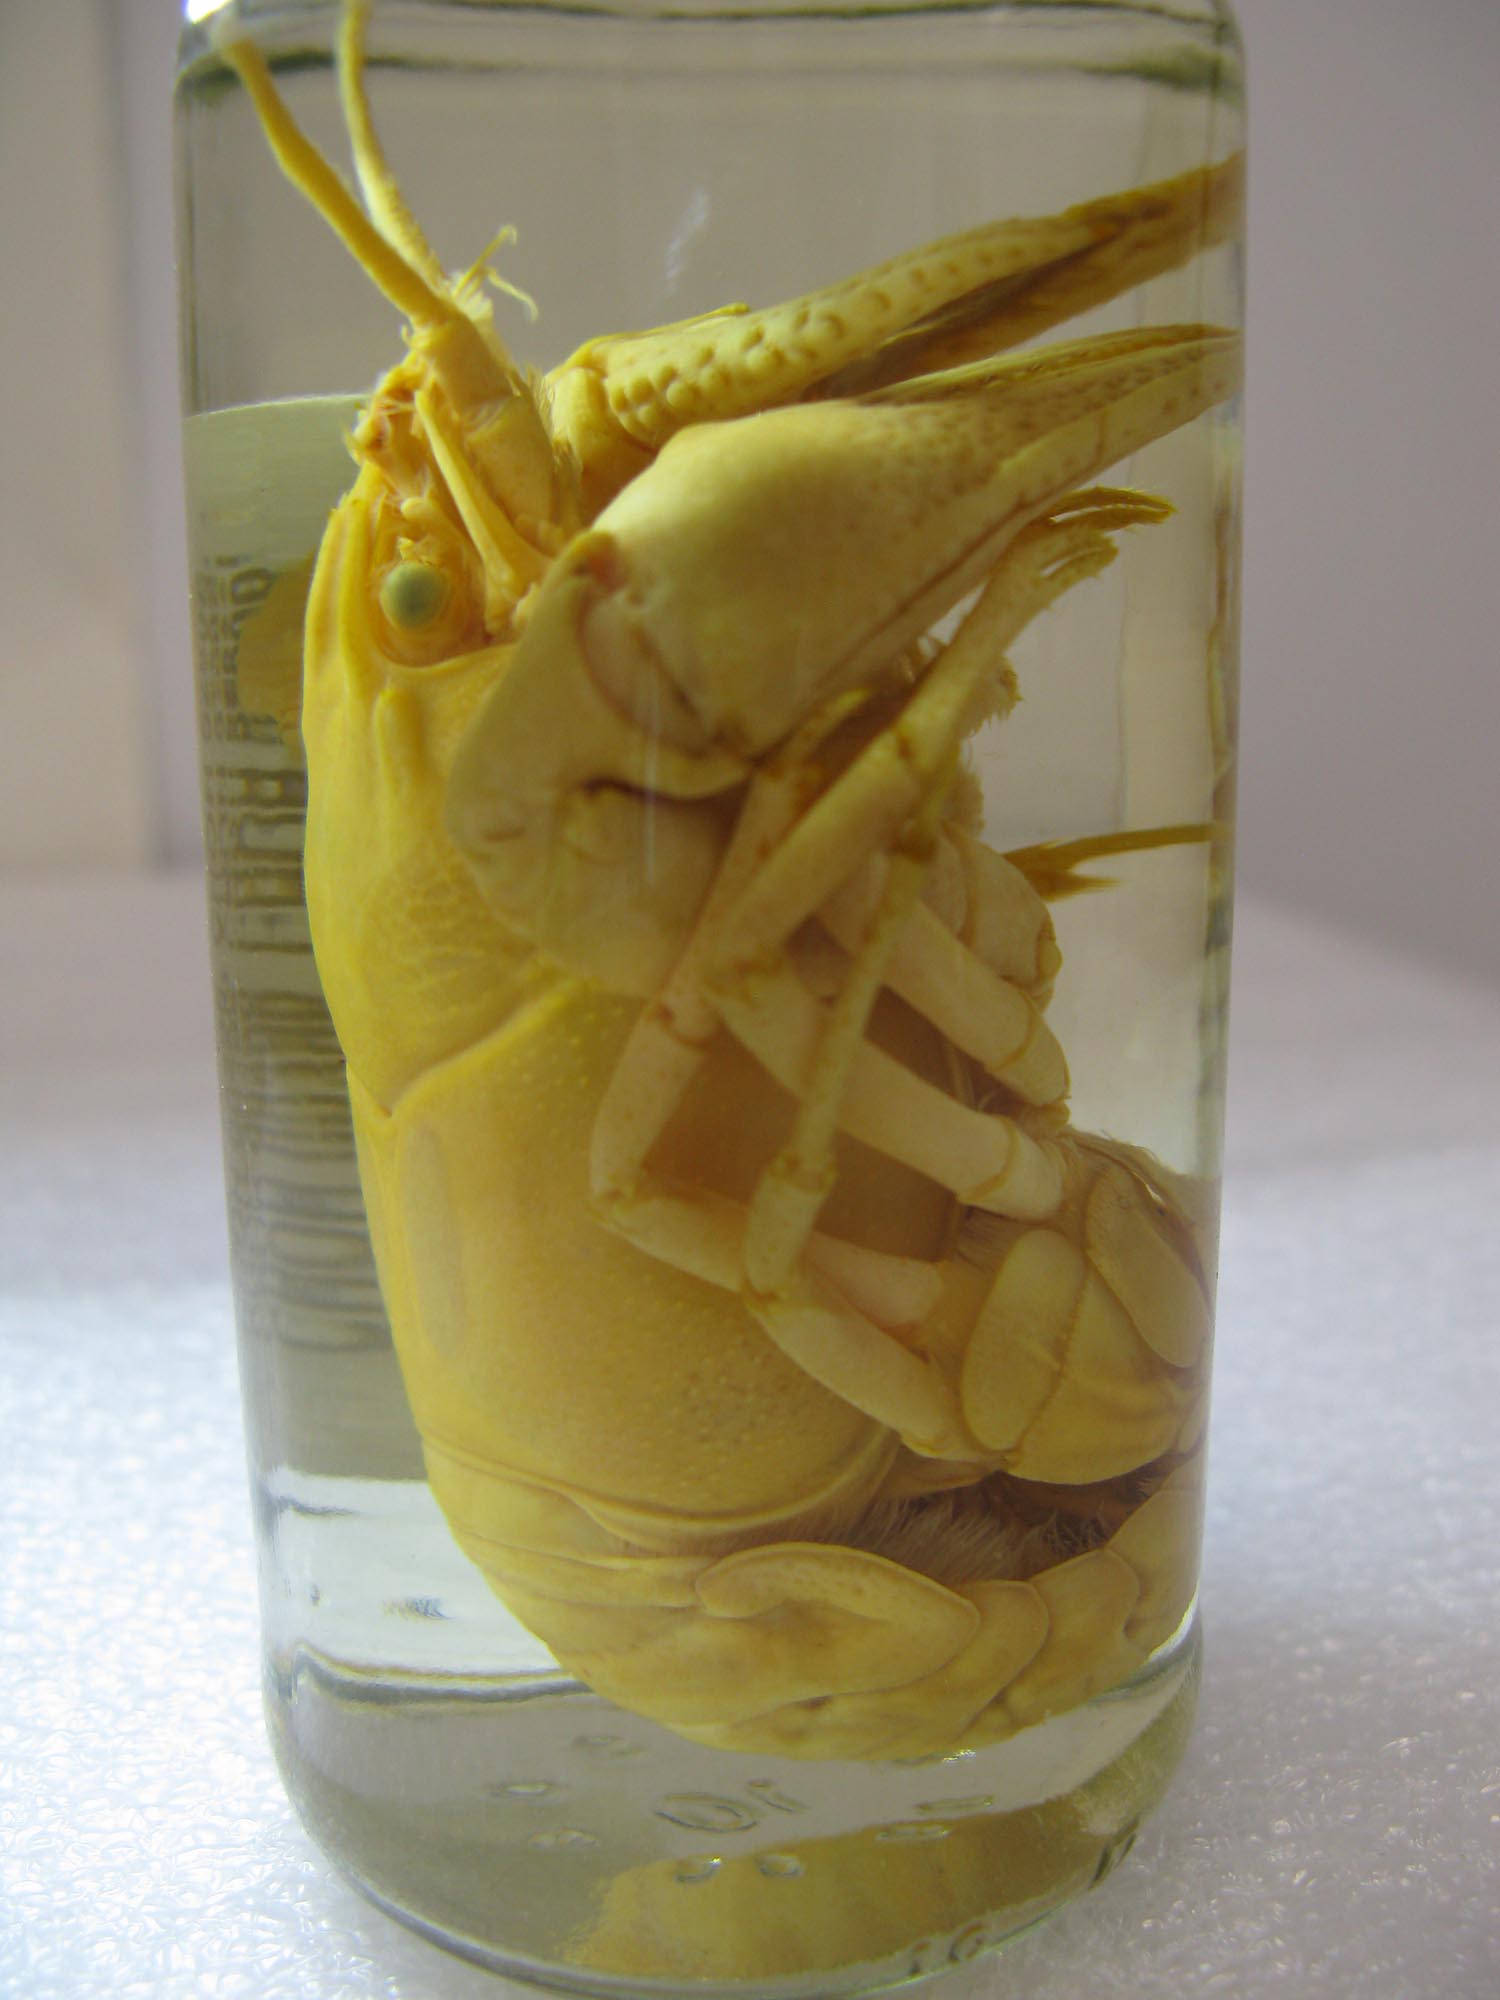 Crayfish specimen in a jar